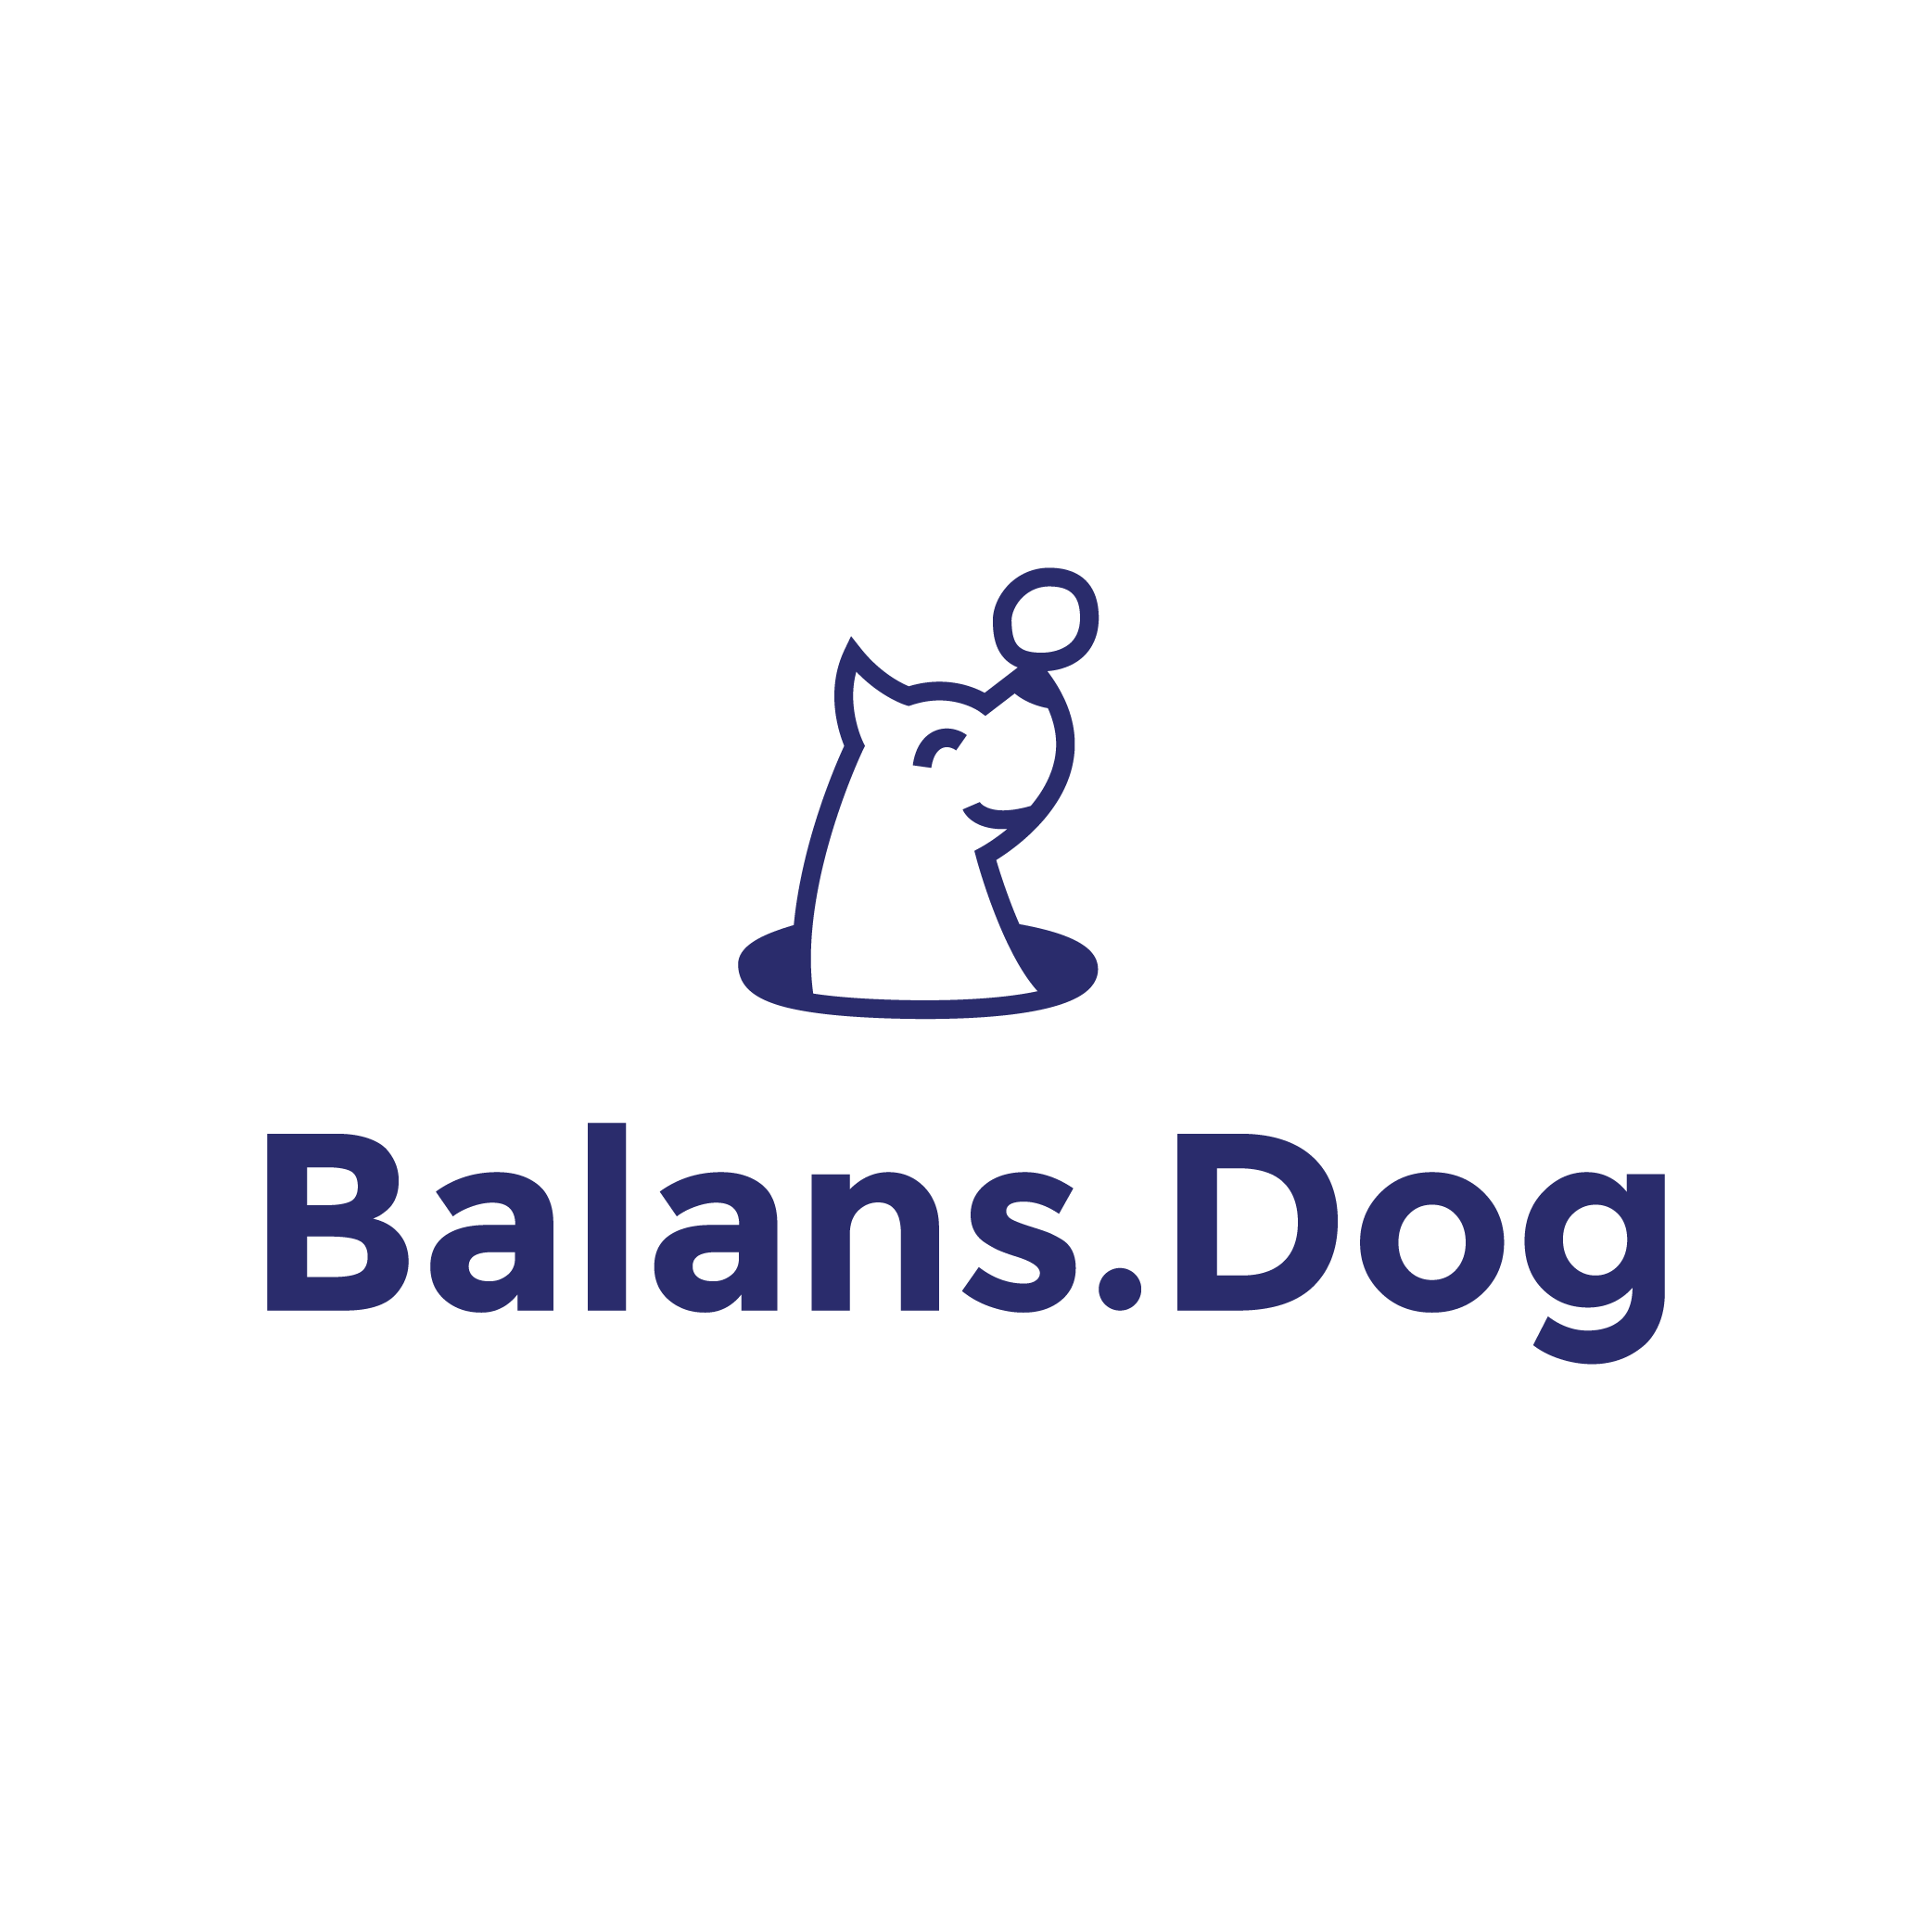 Balans.dog